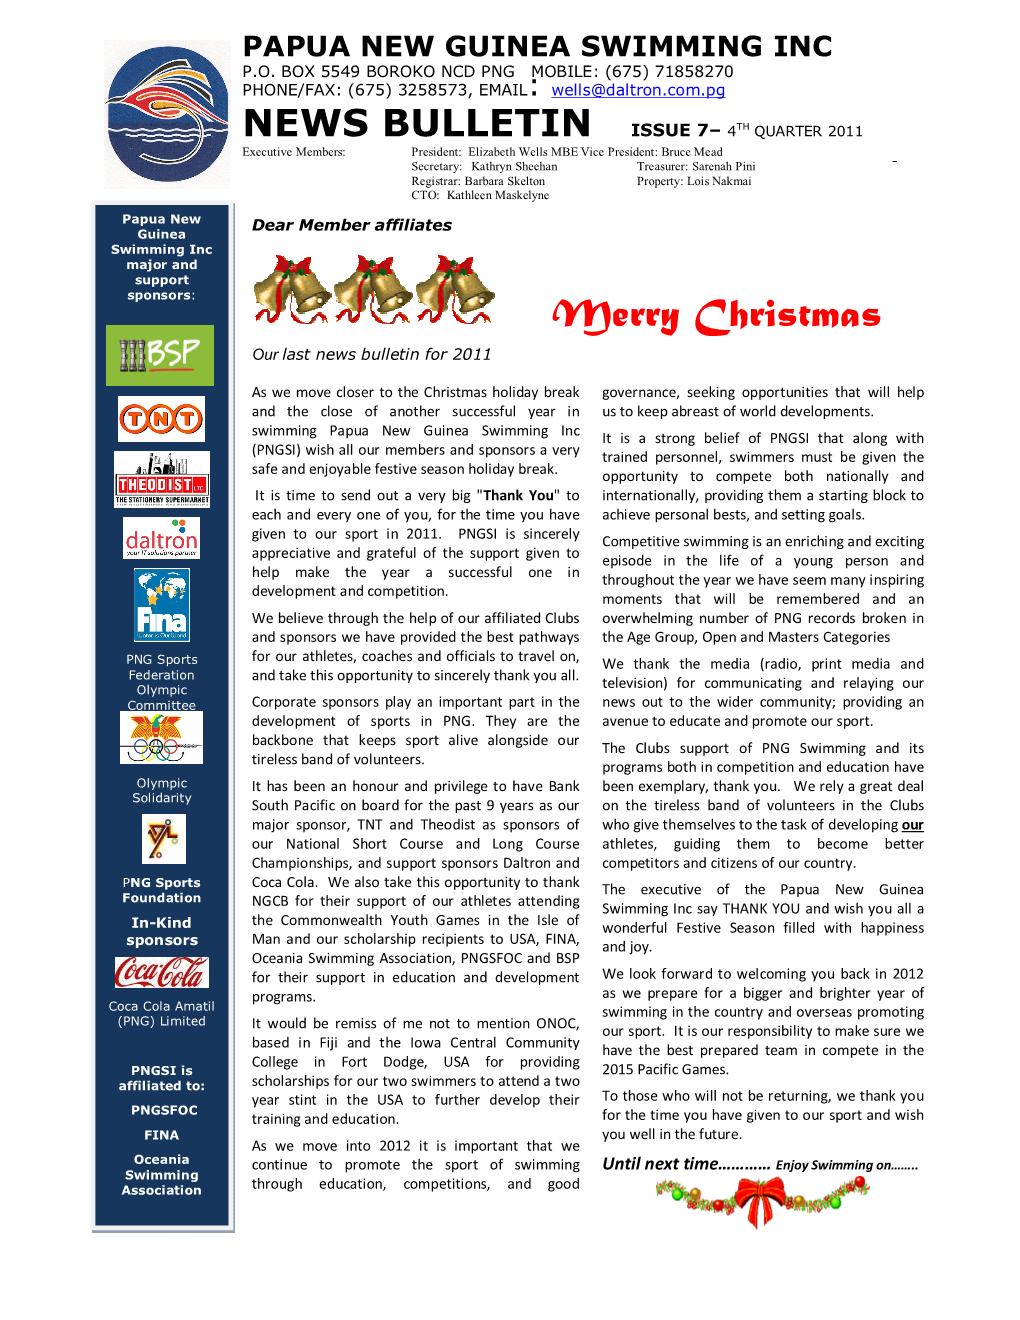 Merry Christmas Our Last News Bulletin for 2011